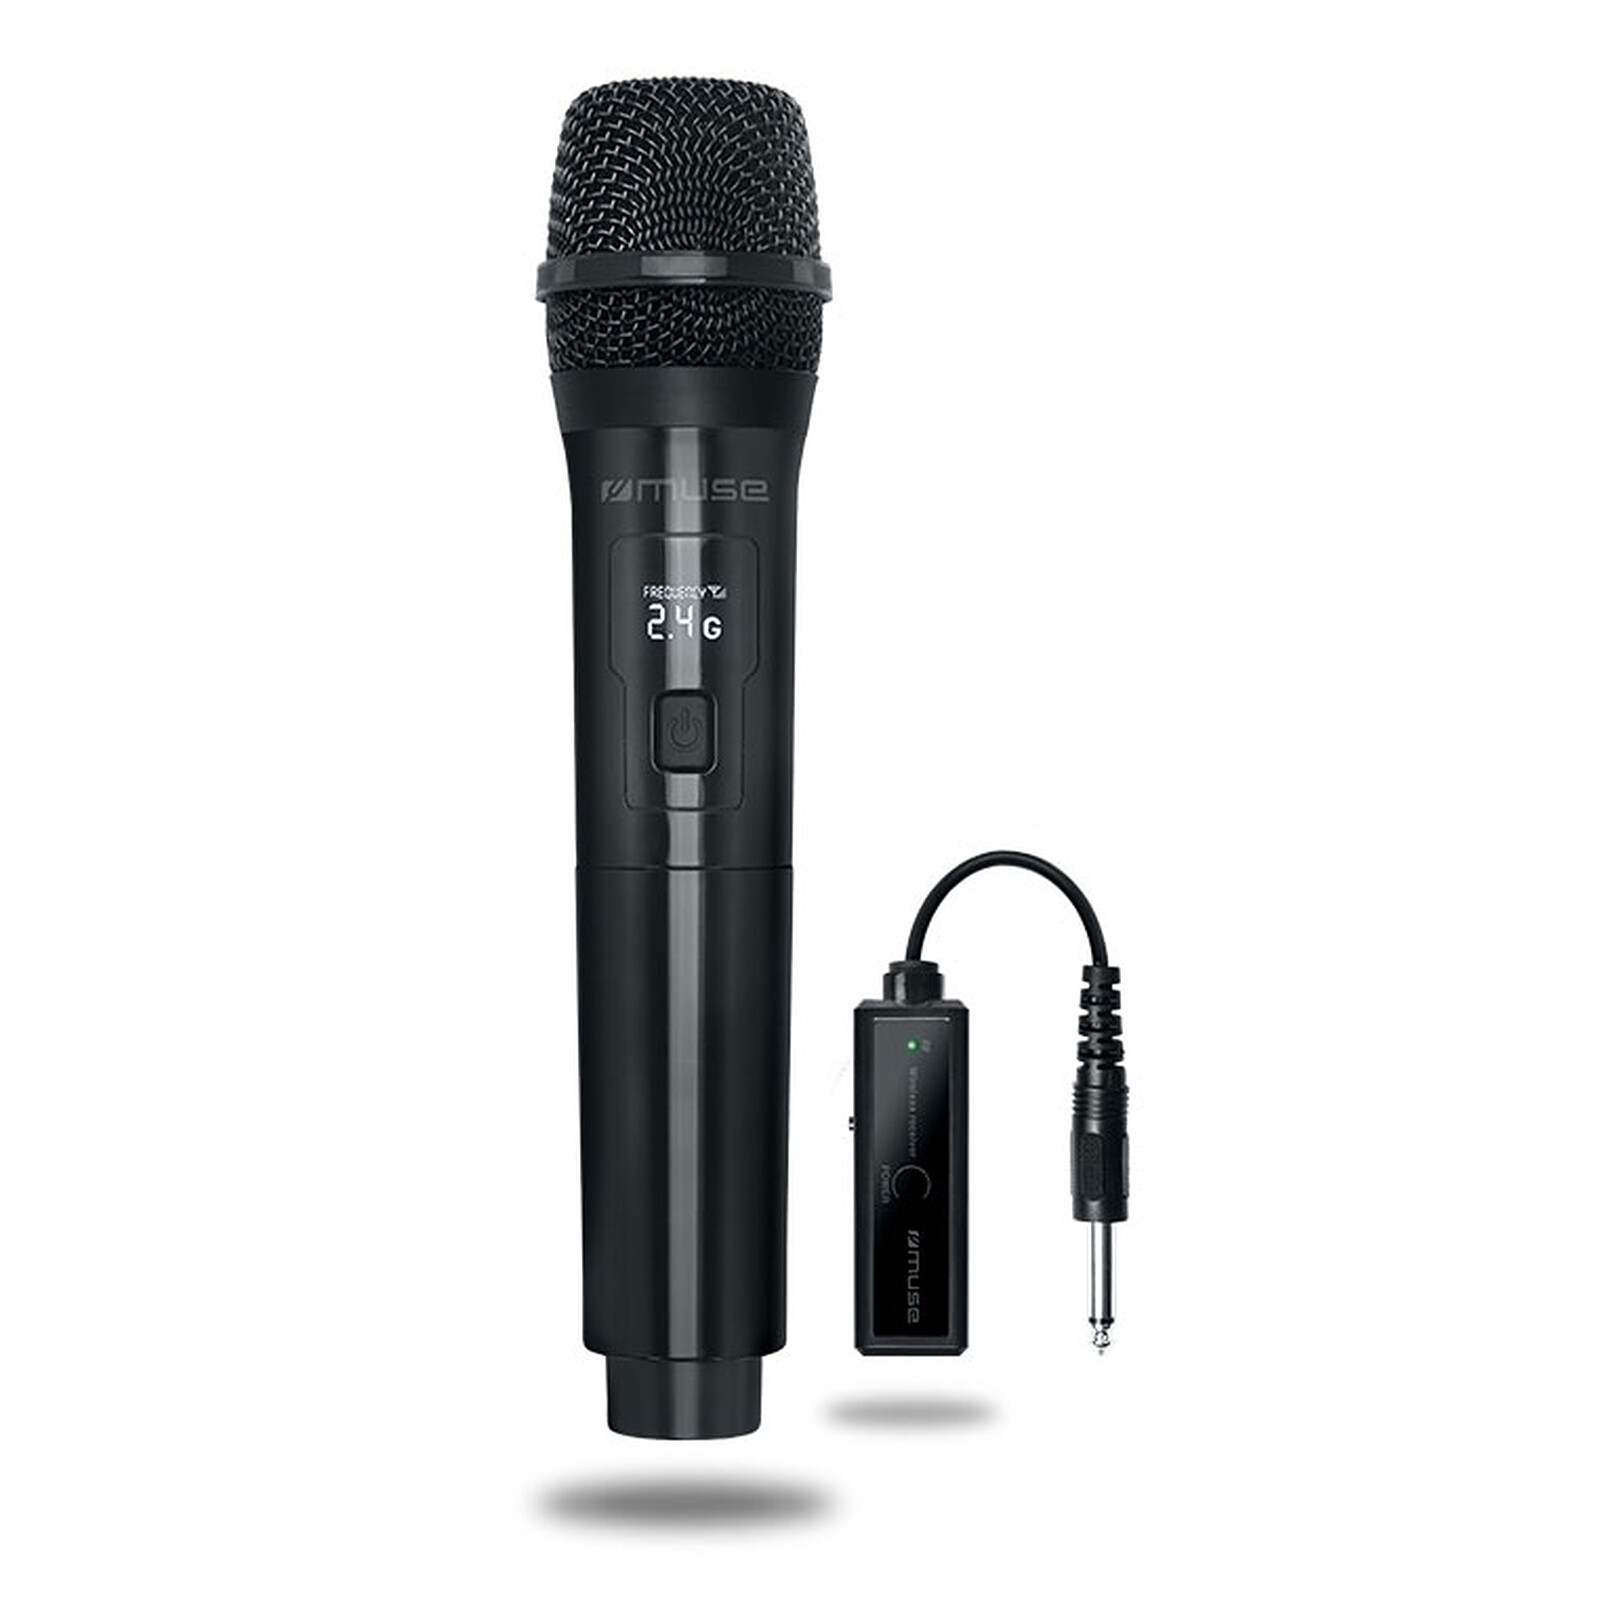 RODE NT-USB+ - Microphone - Garantie 3 ans LDLC